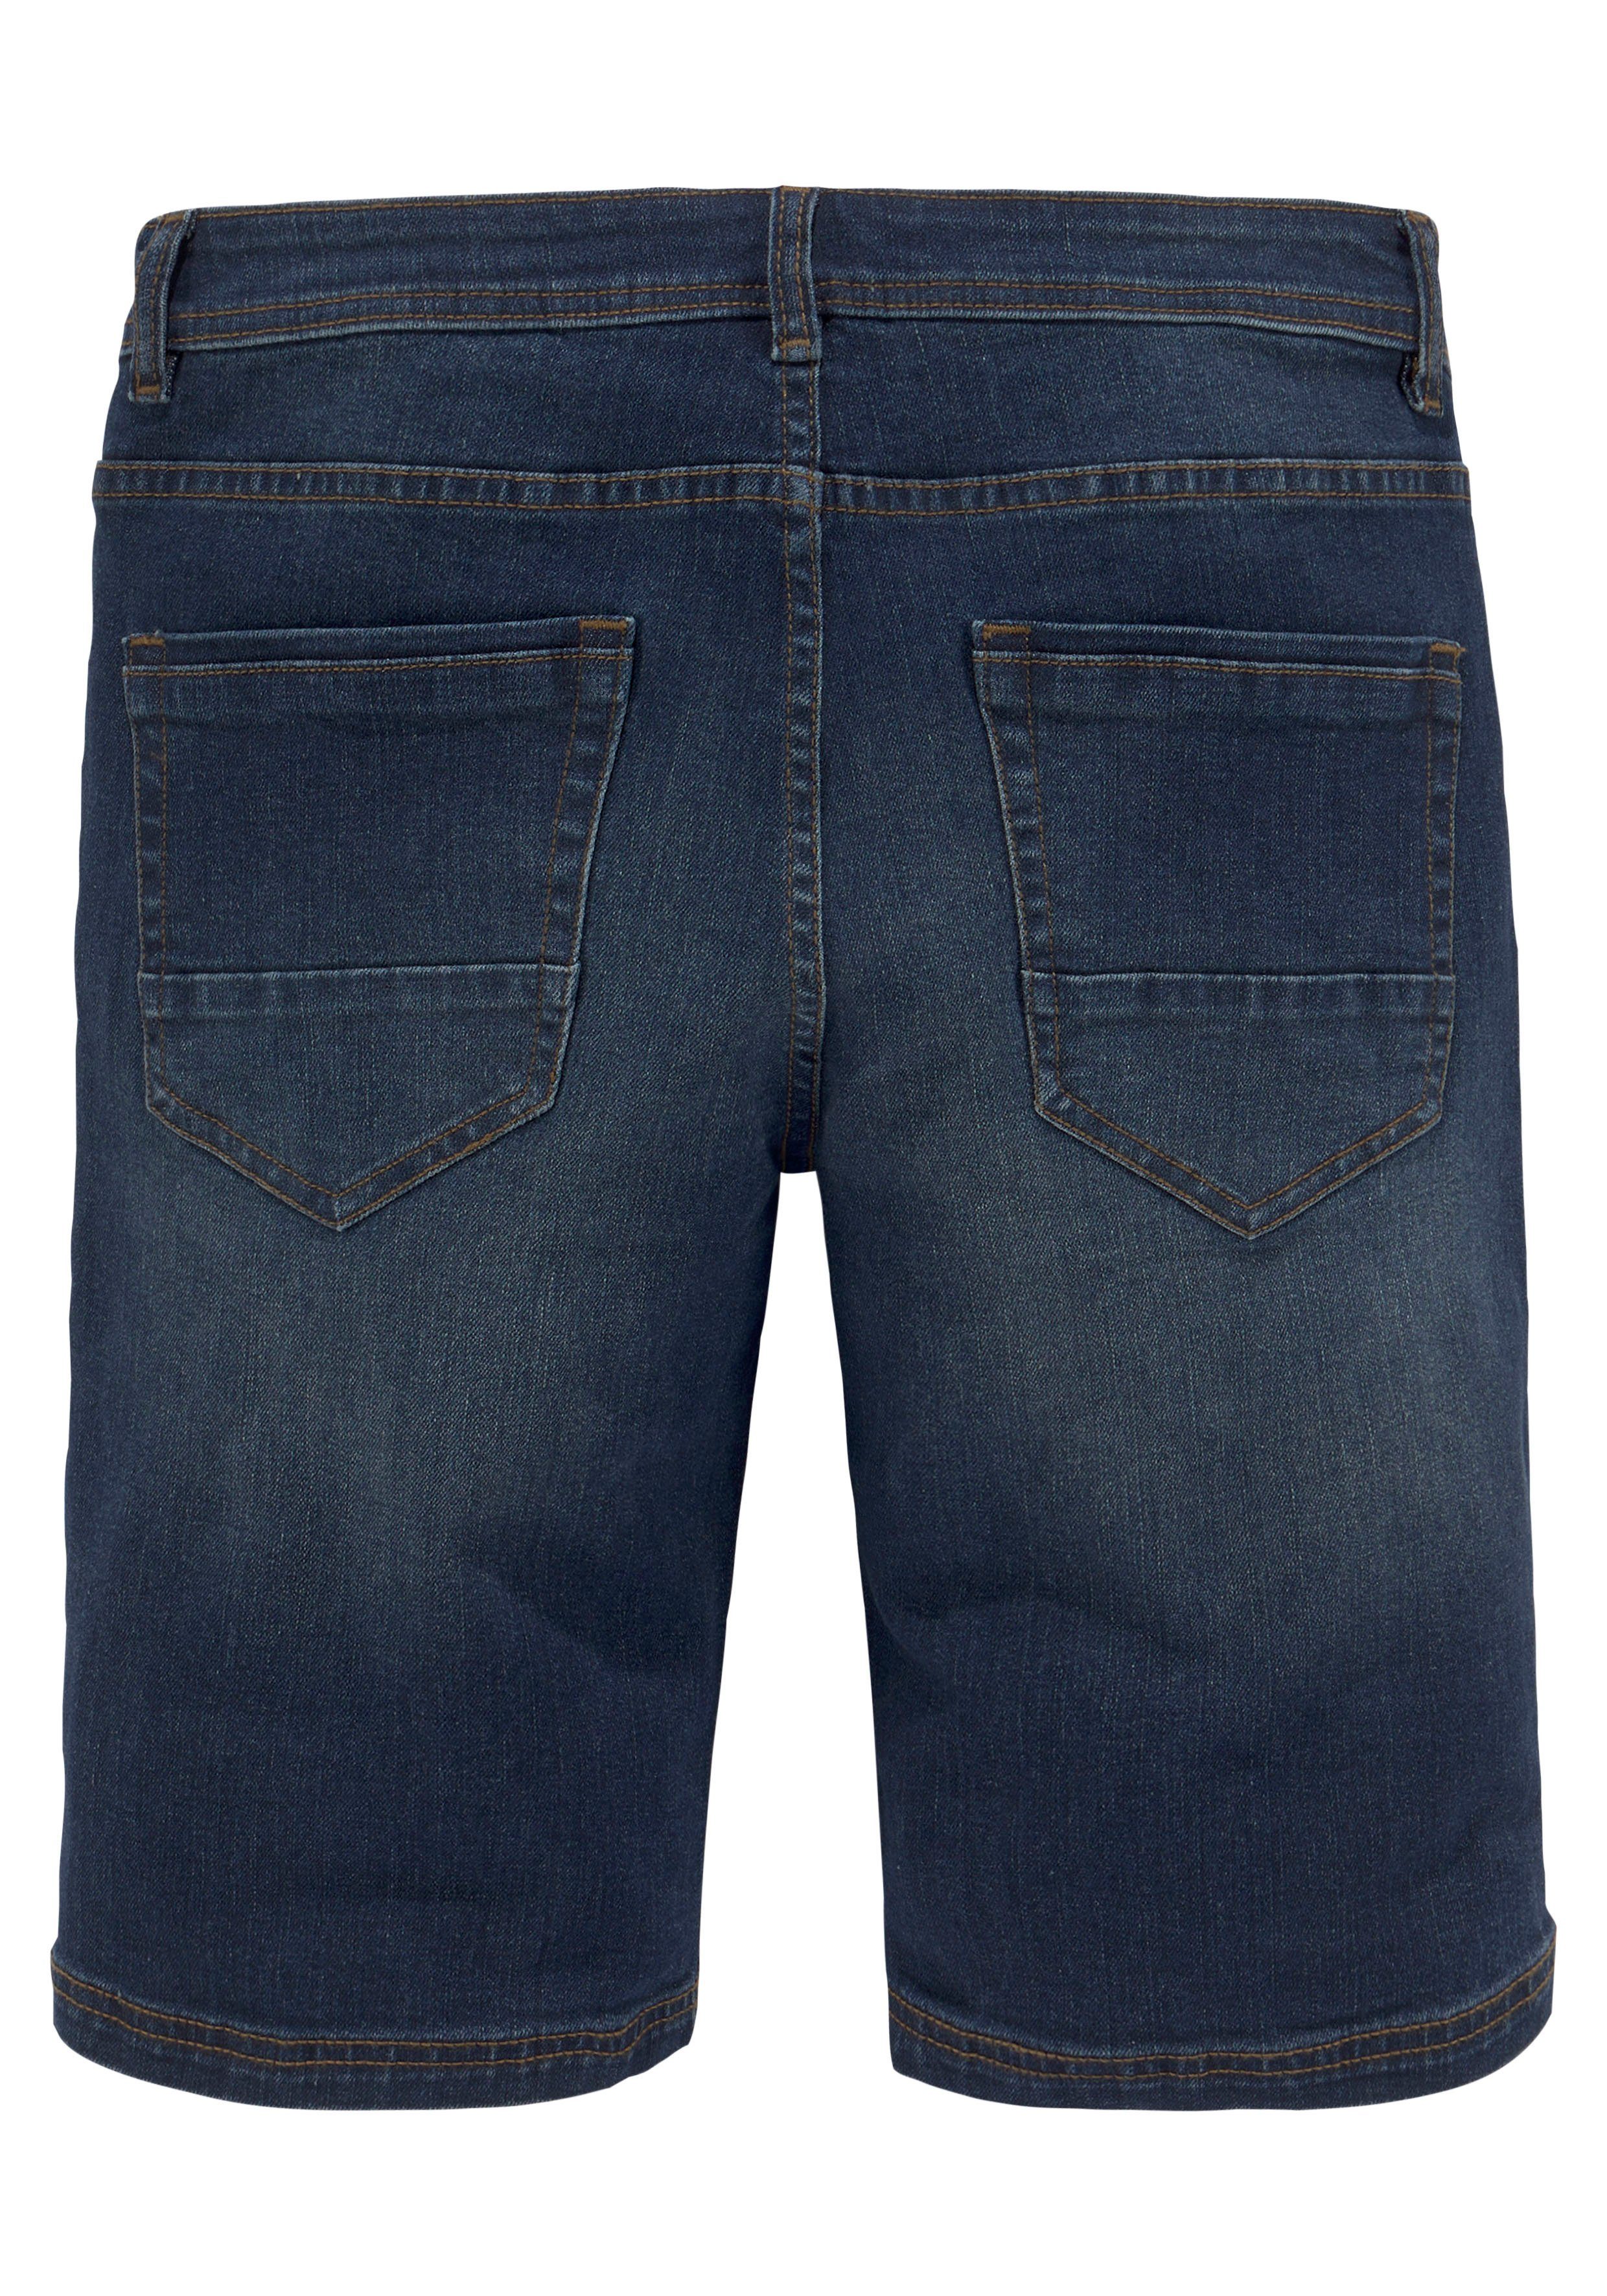 Shorts AJC dark im 5-Pocket-Stil blue